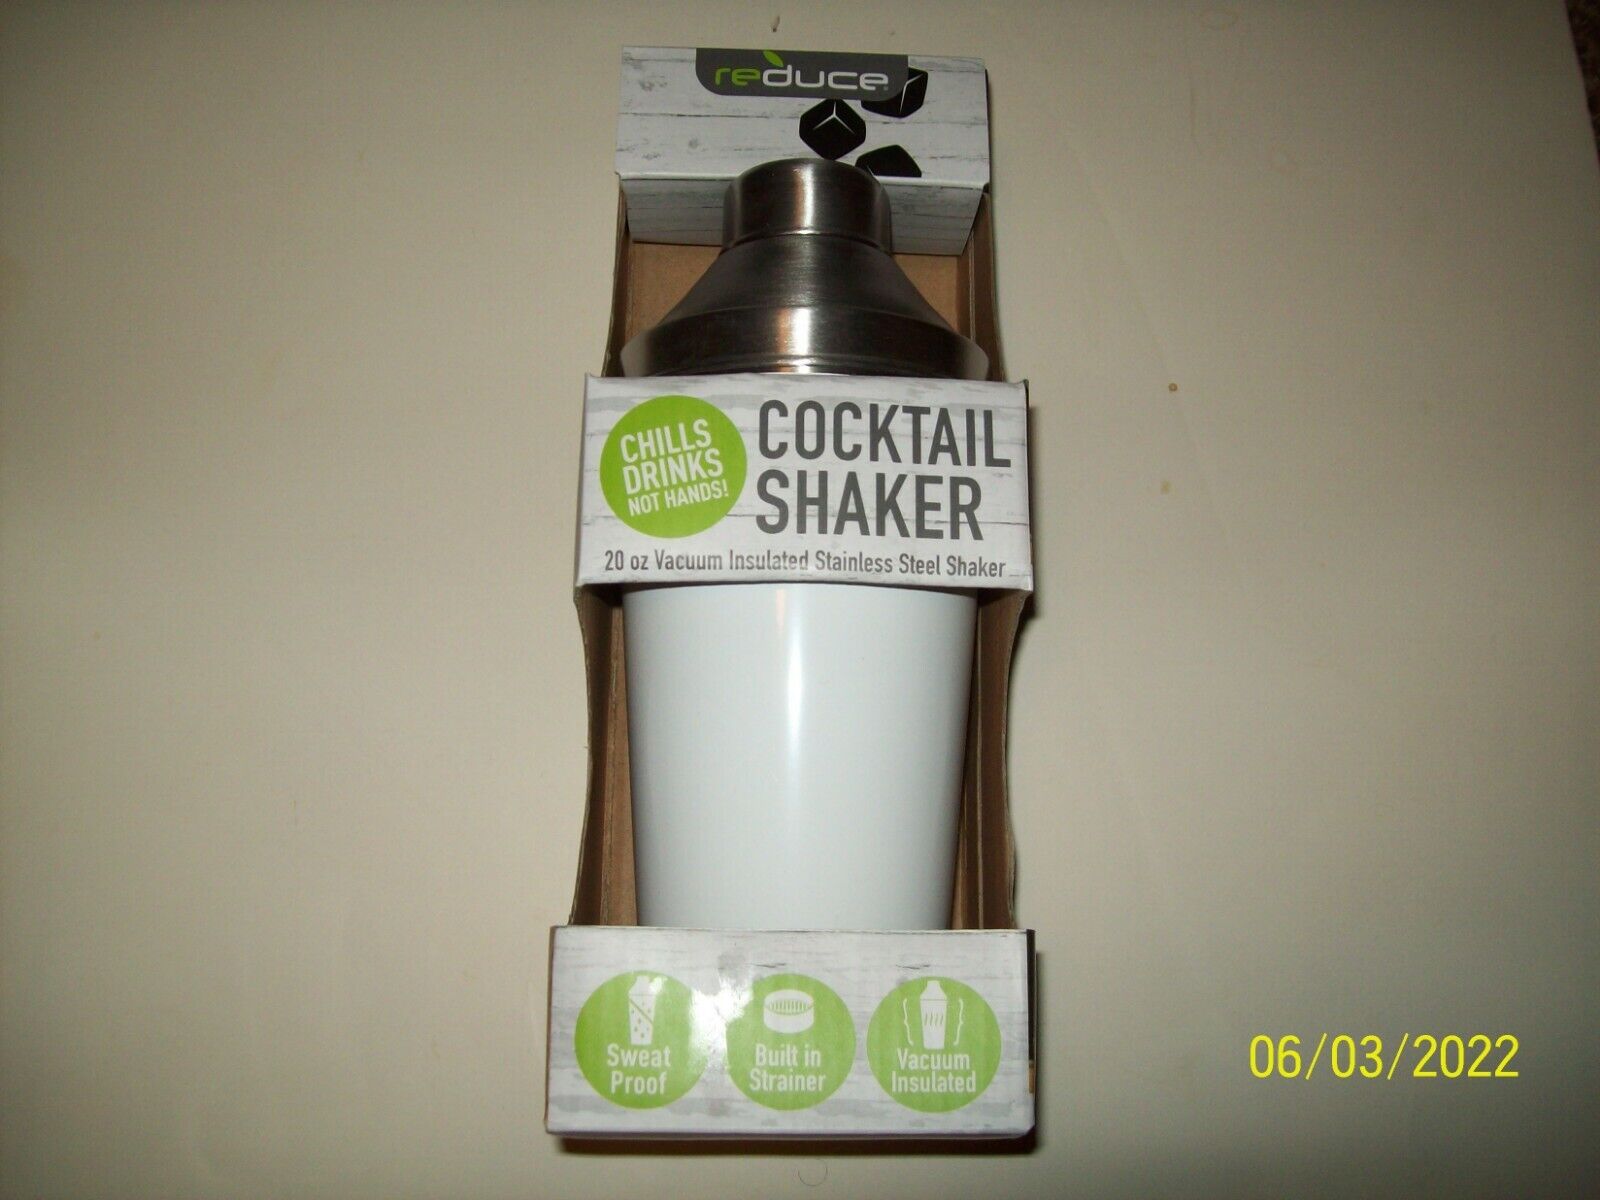 Reduce Cocktail Shaker